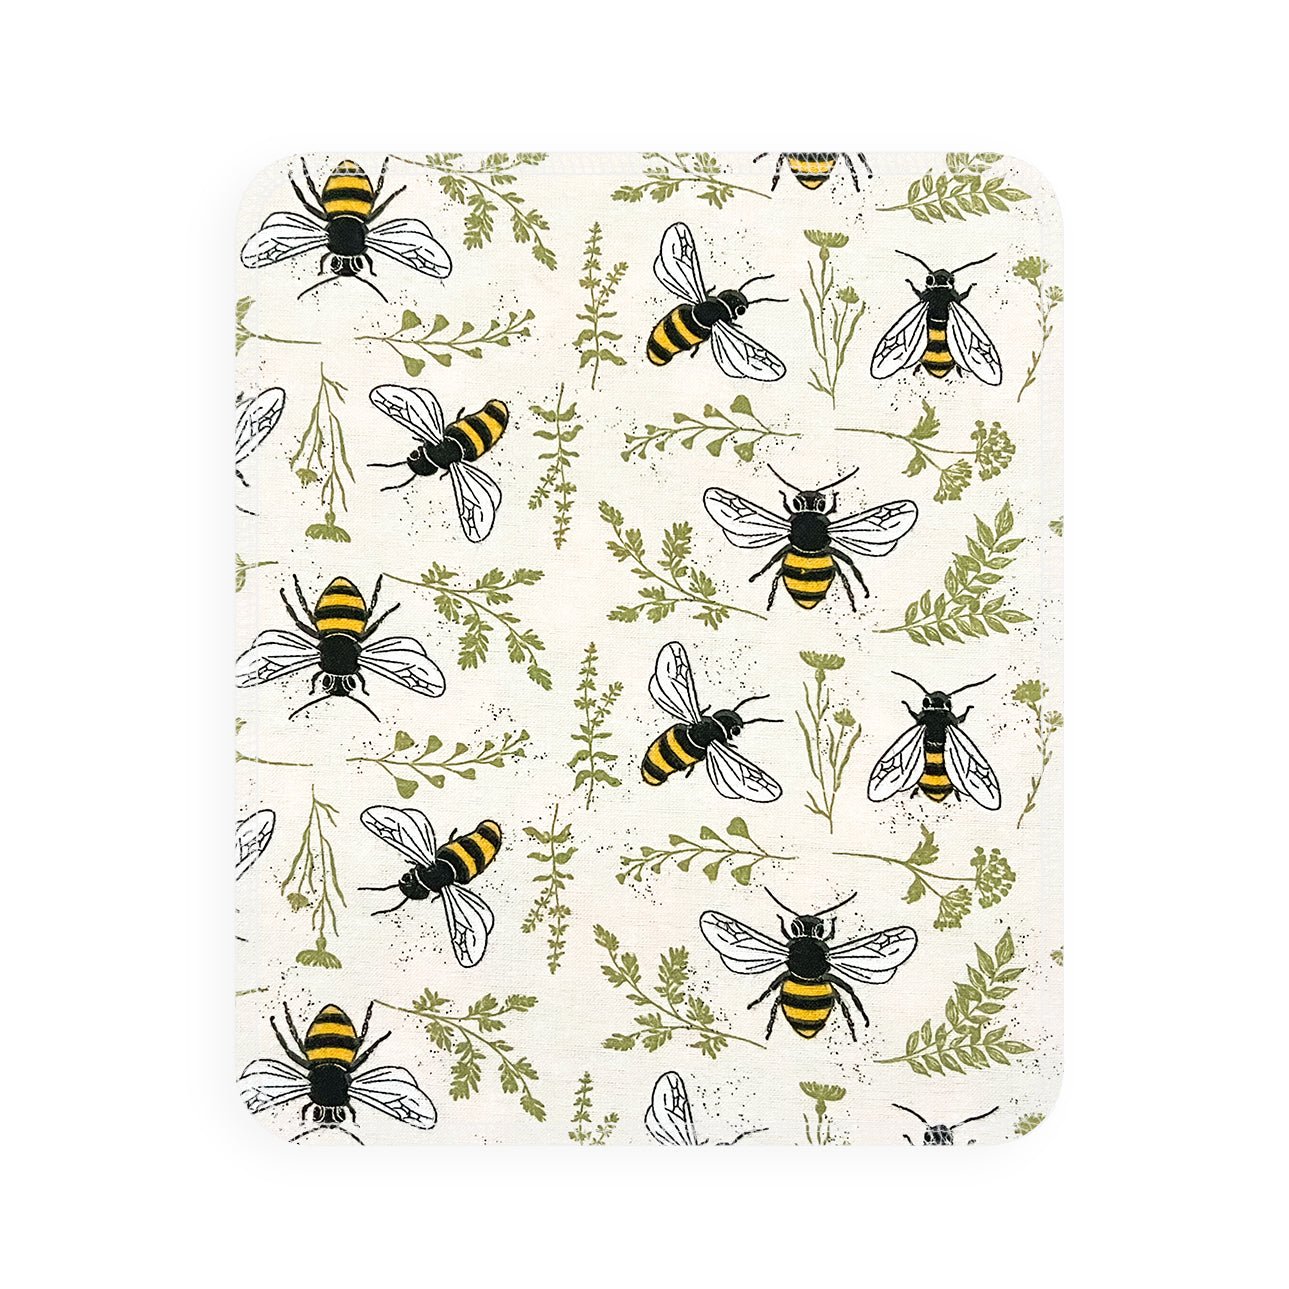 UNpaper® Towel - Bees and Plants - Marley's Monsters - Reusable Paper Towel